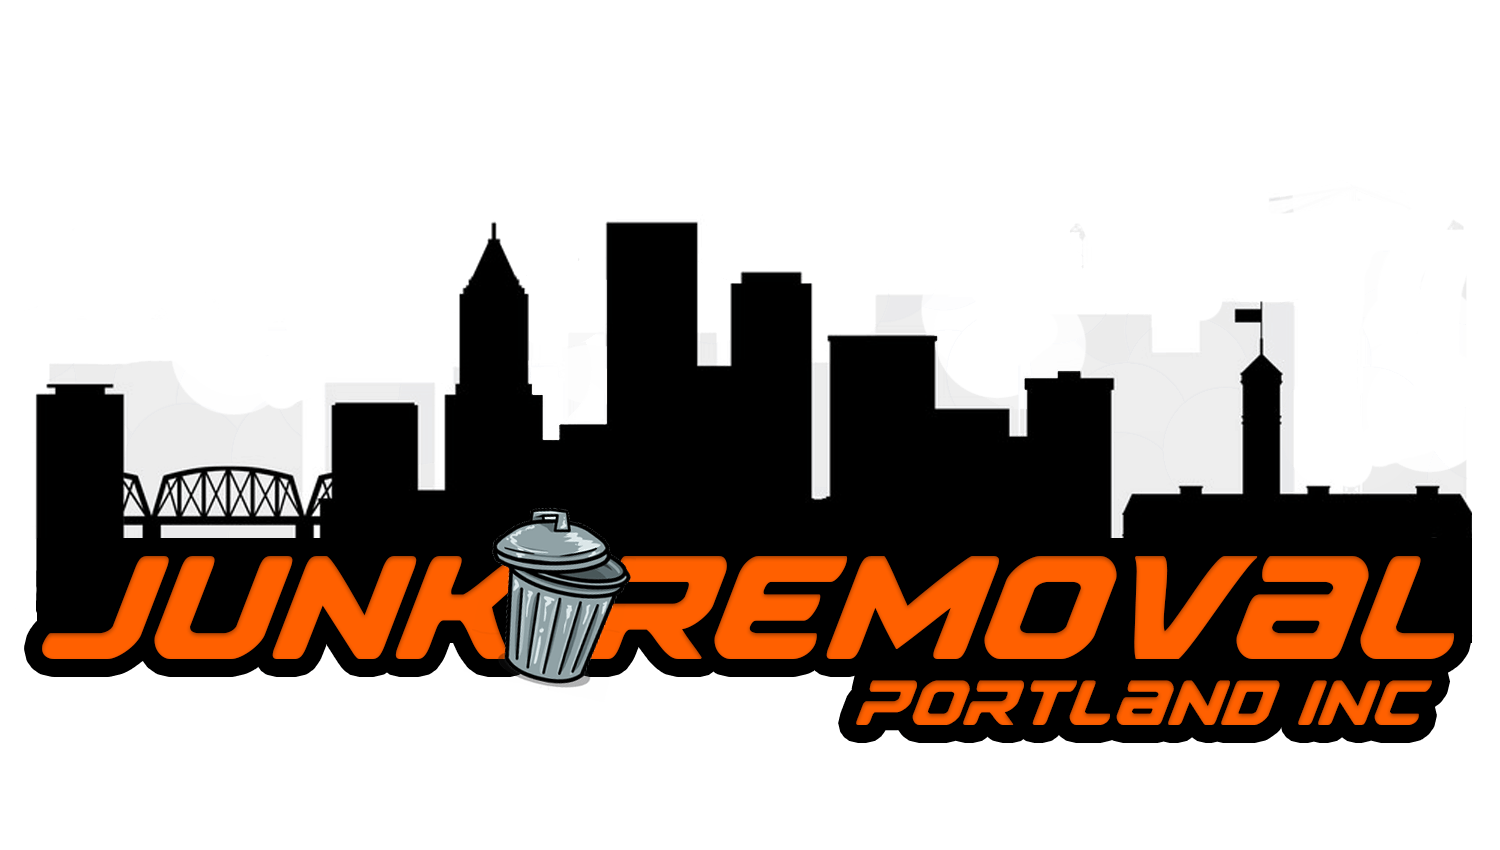 Junk Removal Portland Inc logo